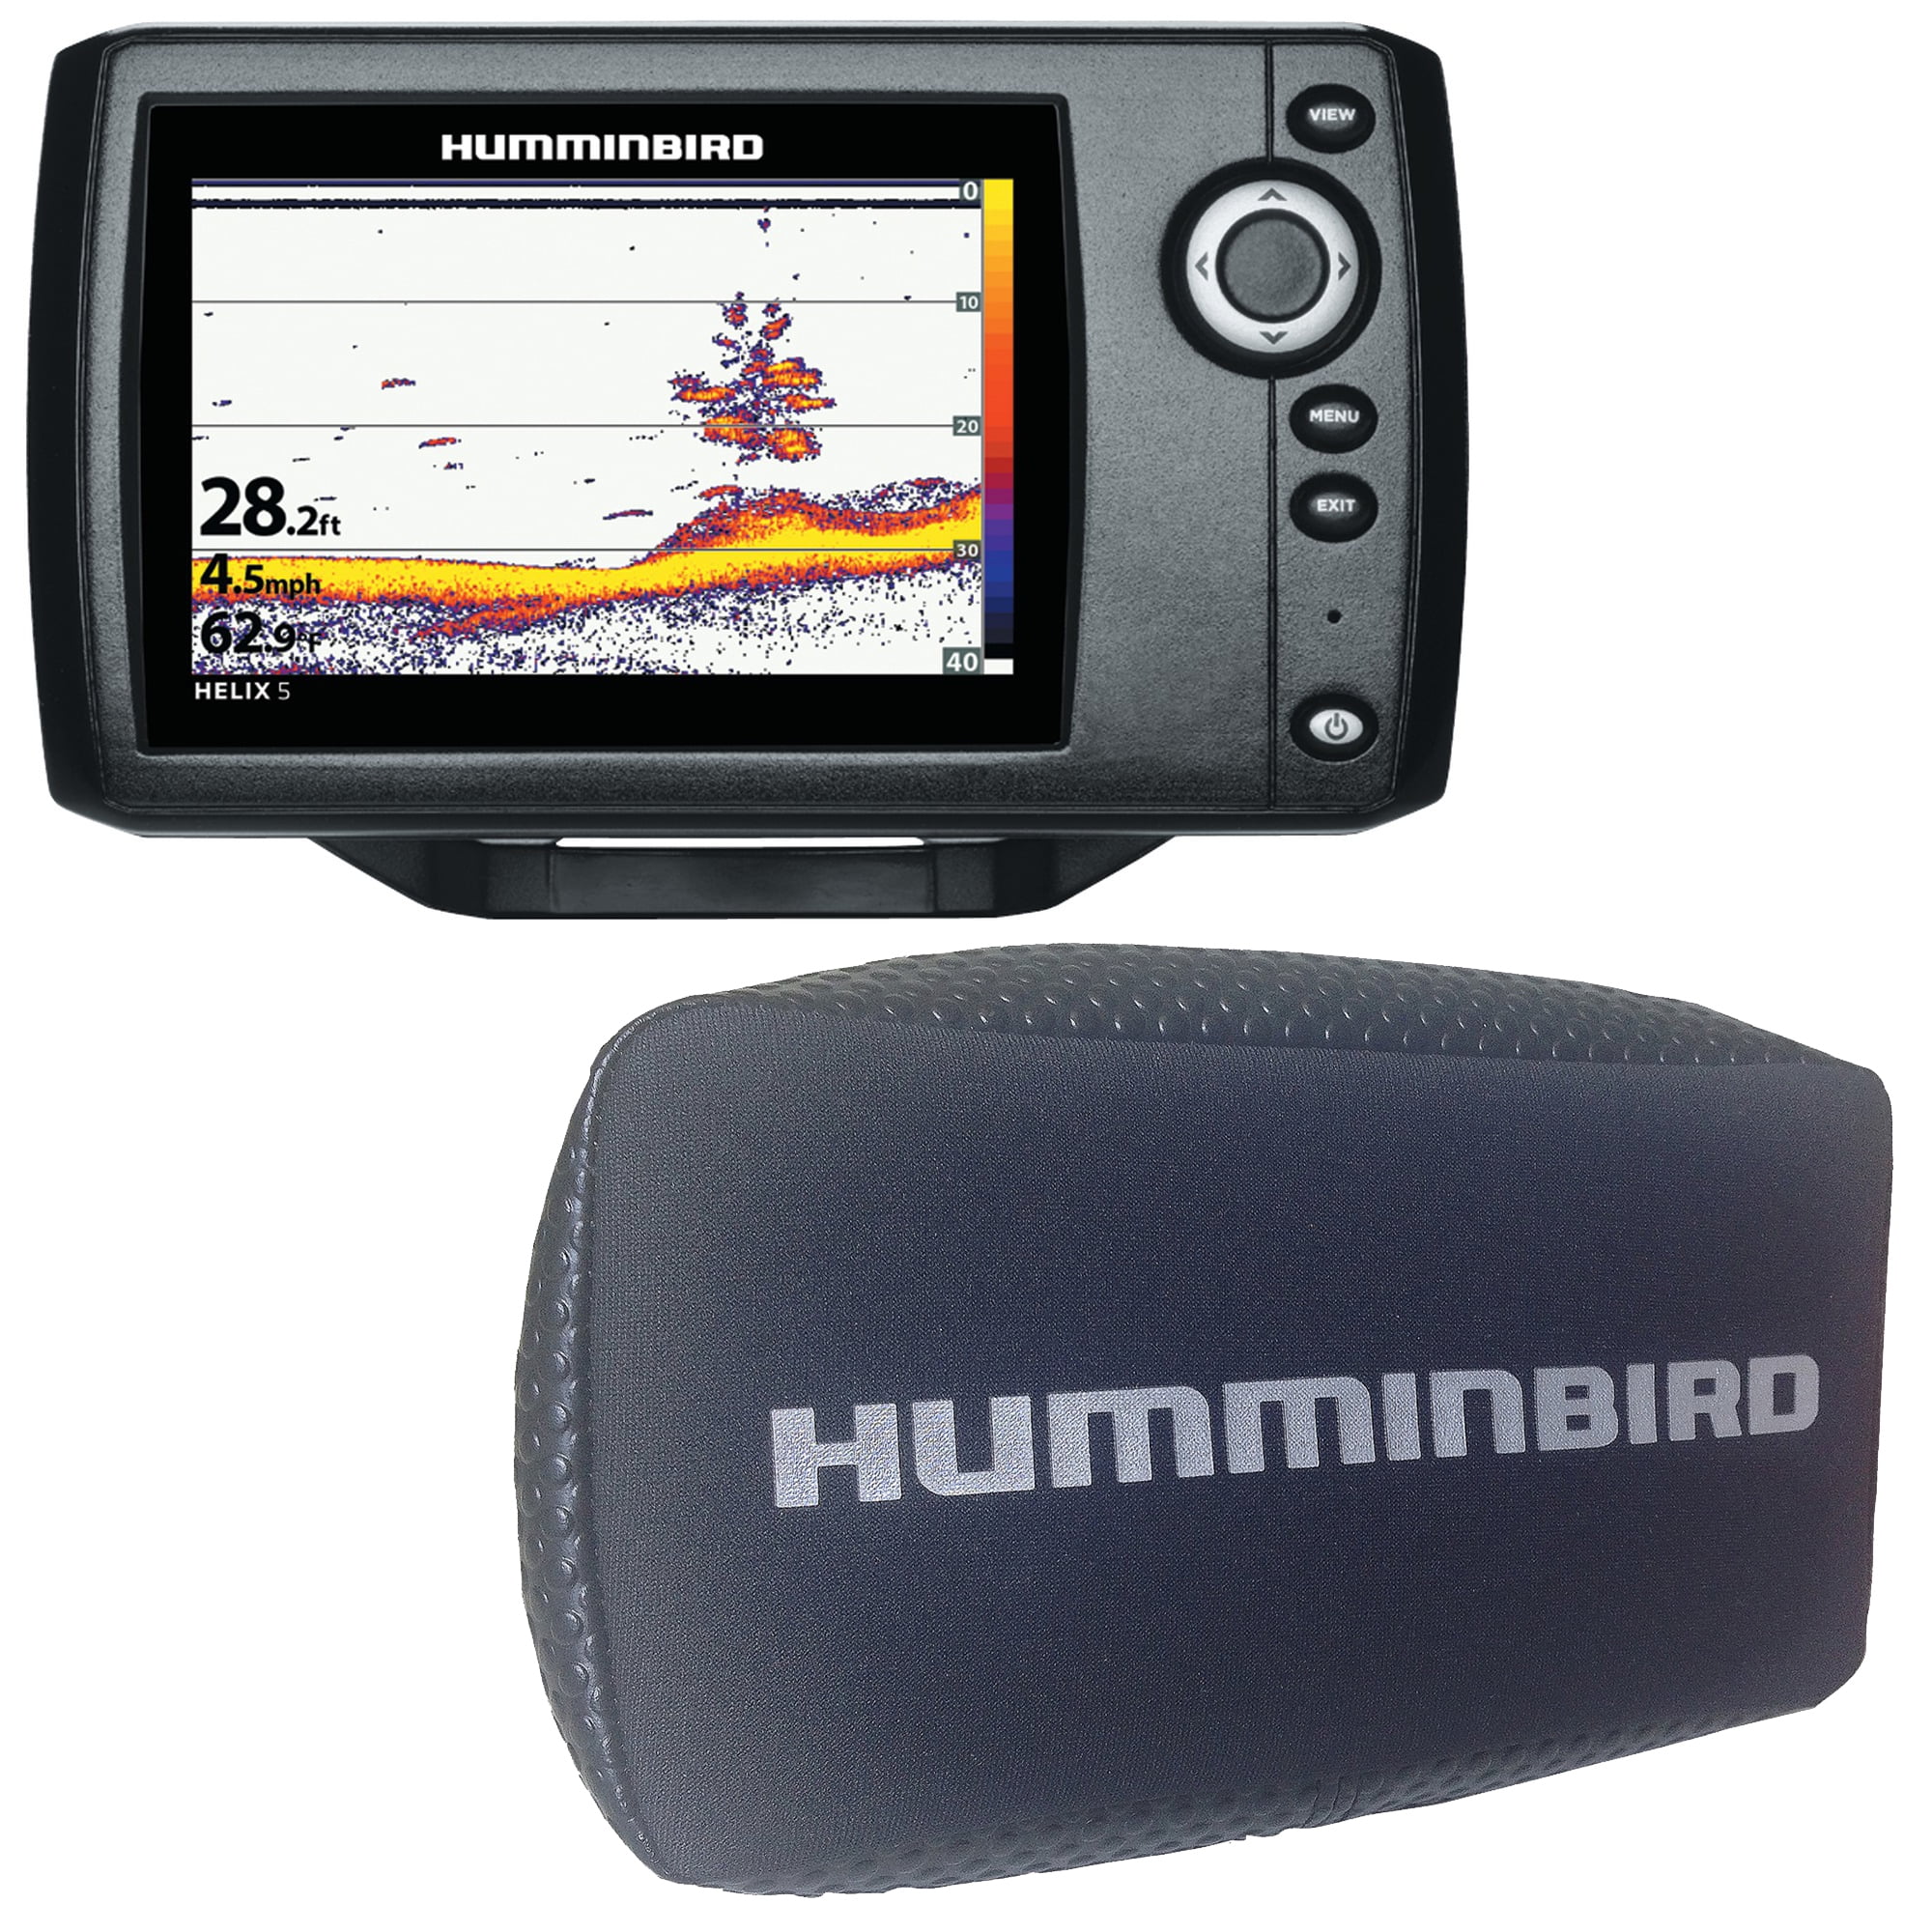 Humminbird Helix 5 Sonar G2 Fishfinder w/ 5 Color Display & Transducer 410190-1 